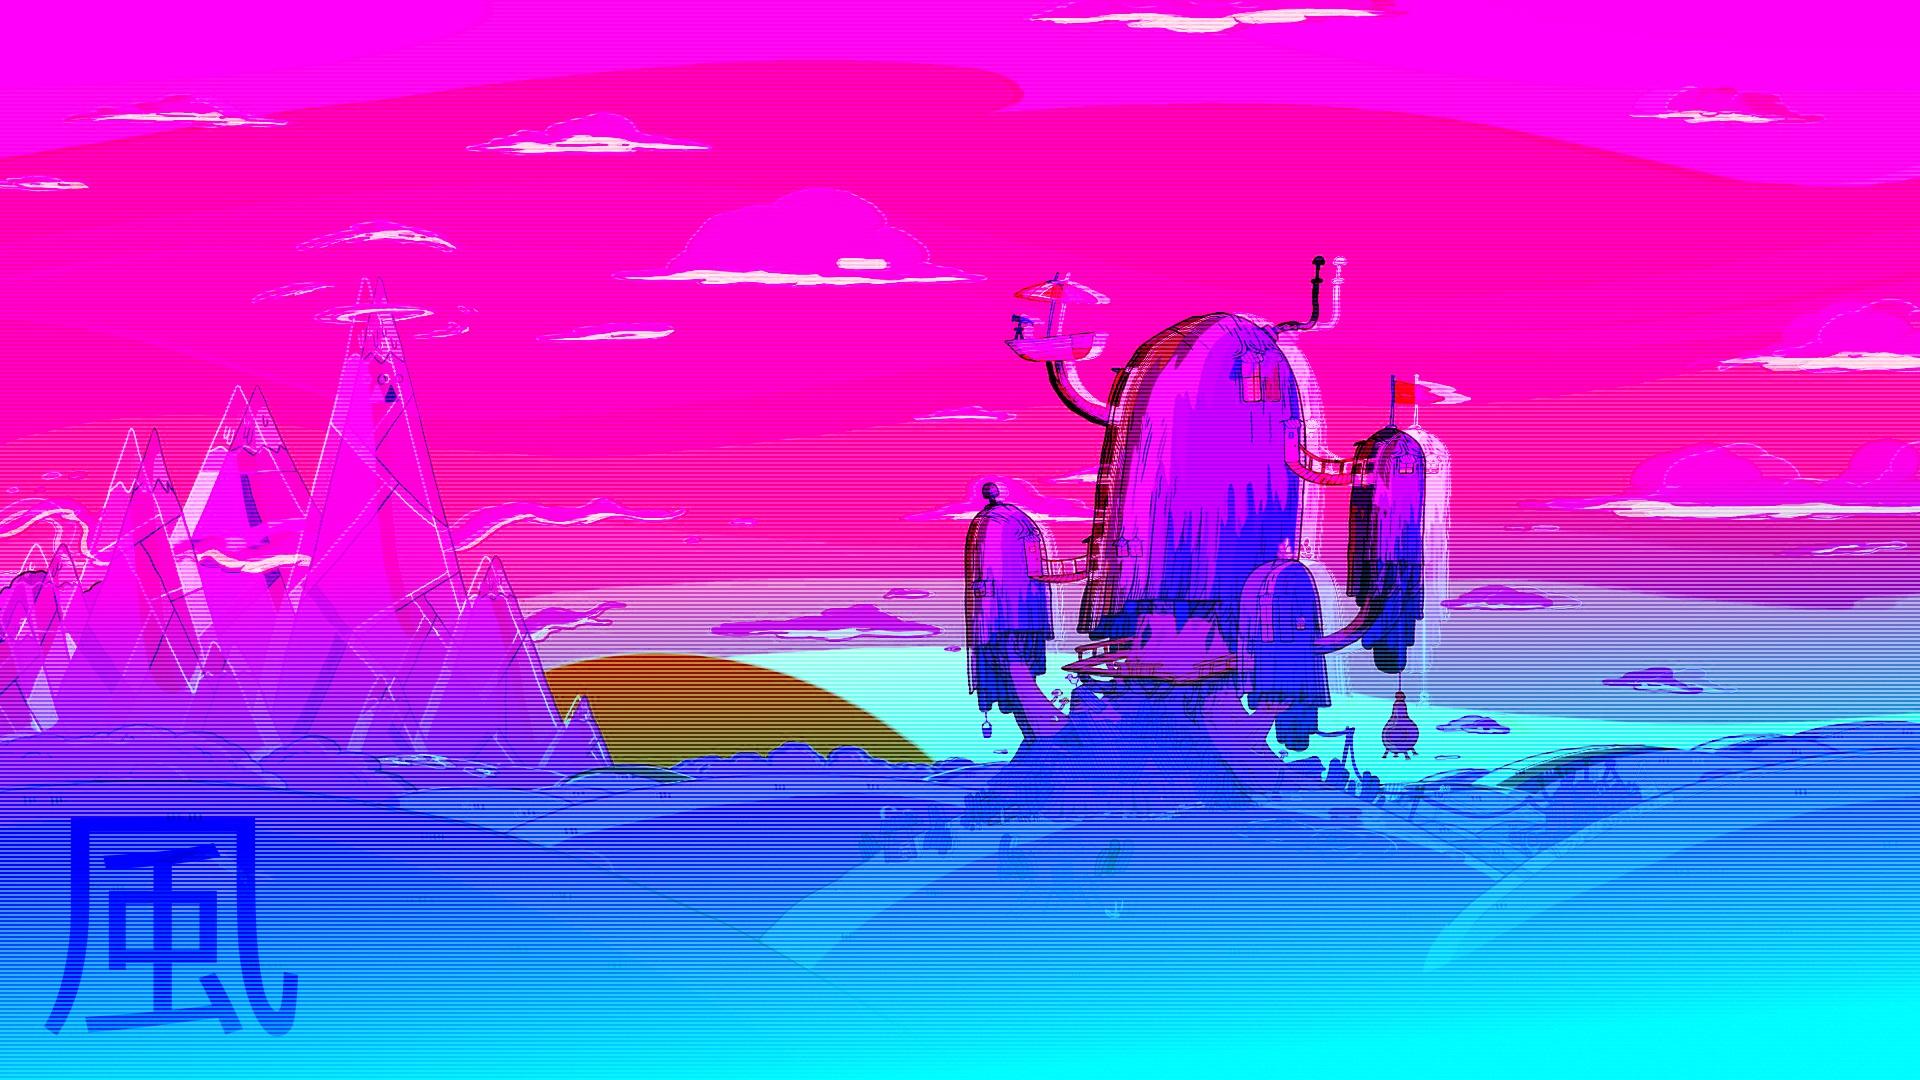 A colorful image of an alien landscape - 1920x1080, Adventure Time